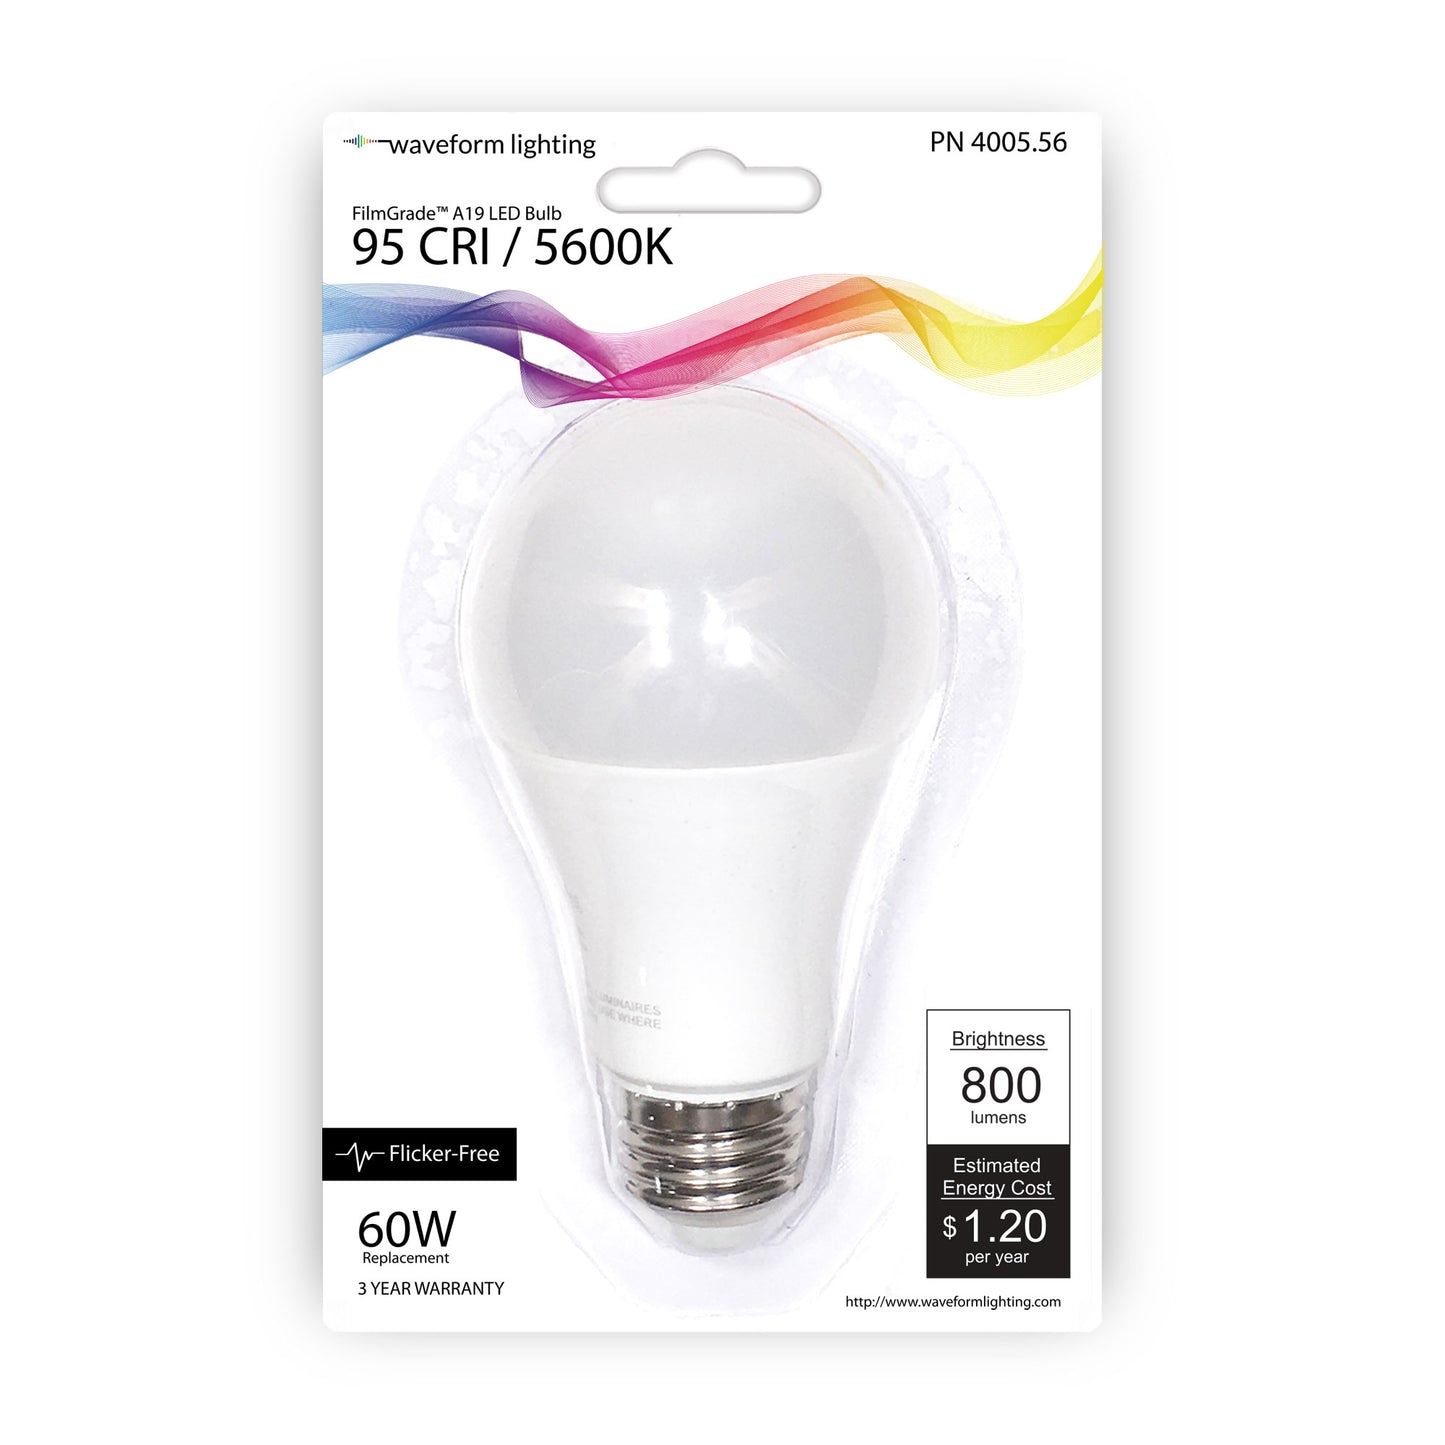 FilmGrade™ Flicker-Free A19 LED Bulb